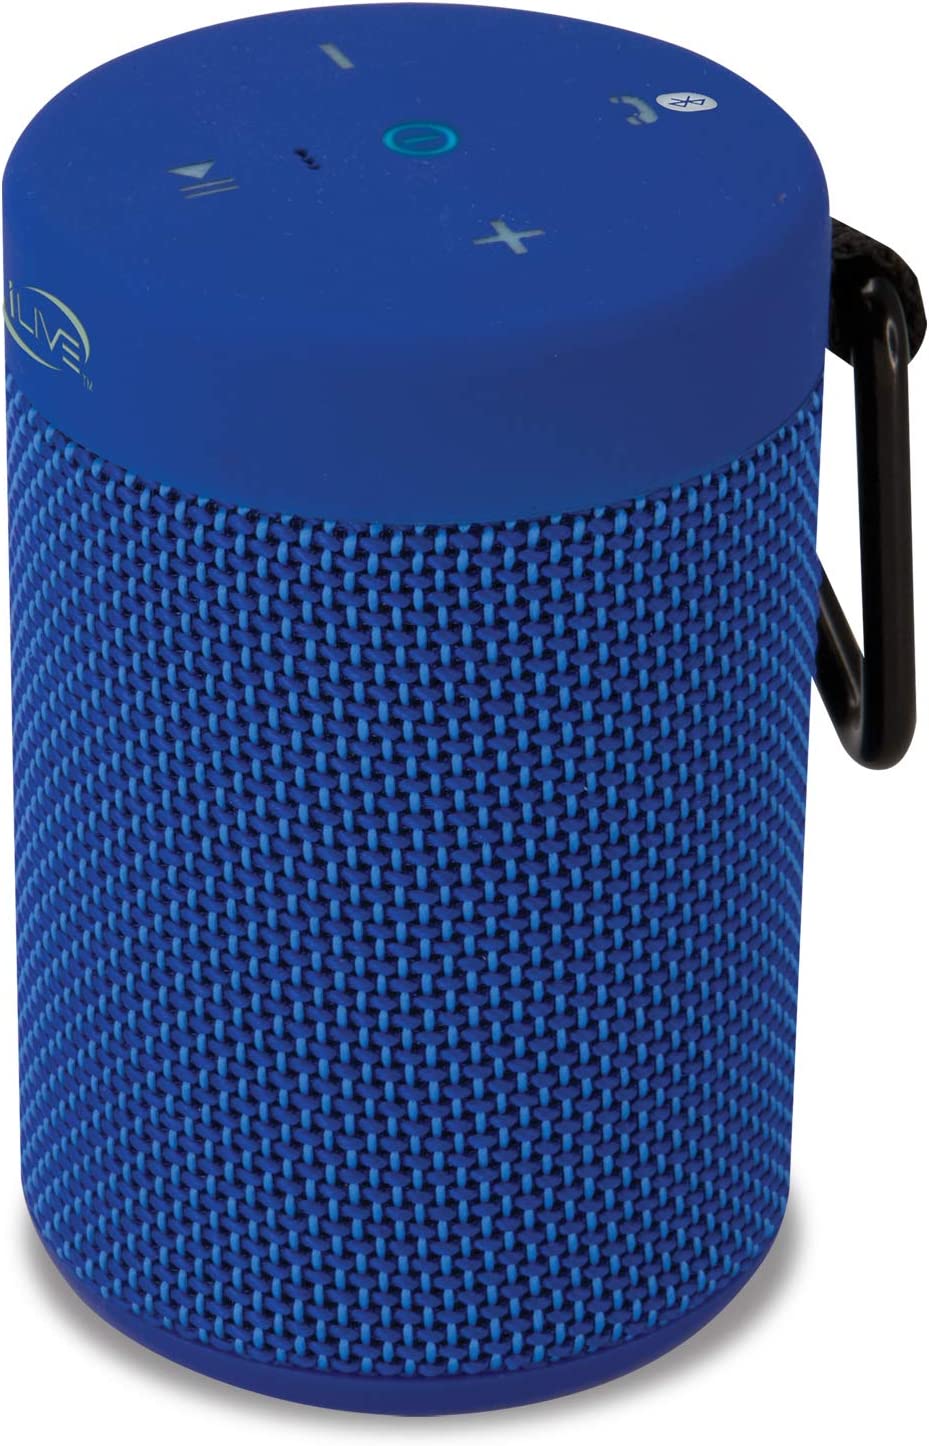 iLive Waterproof Fabric Wireless Speaker, 2.56 x 2.56 x 3.4 Inches, Built-in Rechargeable Battery, Blue (ISBW108BU)